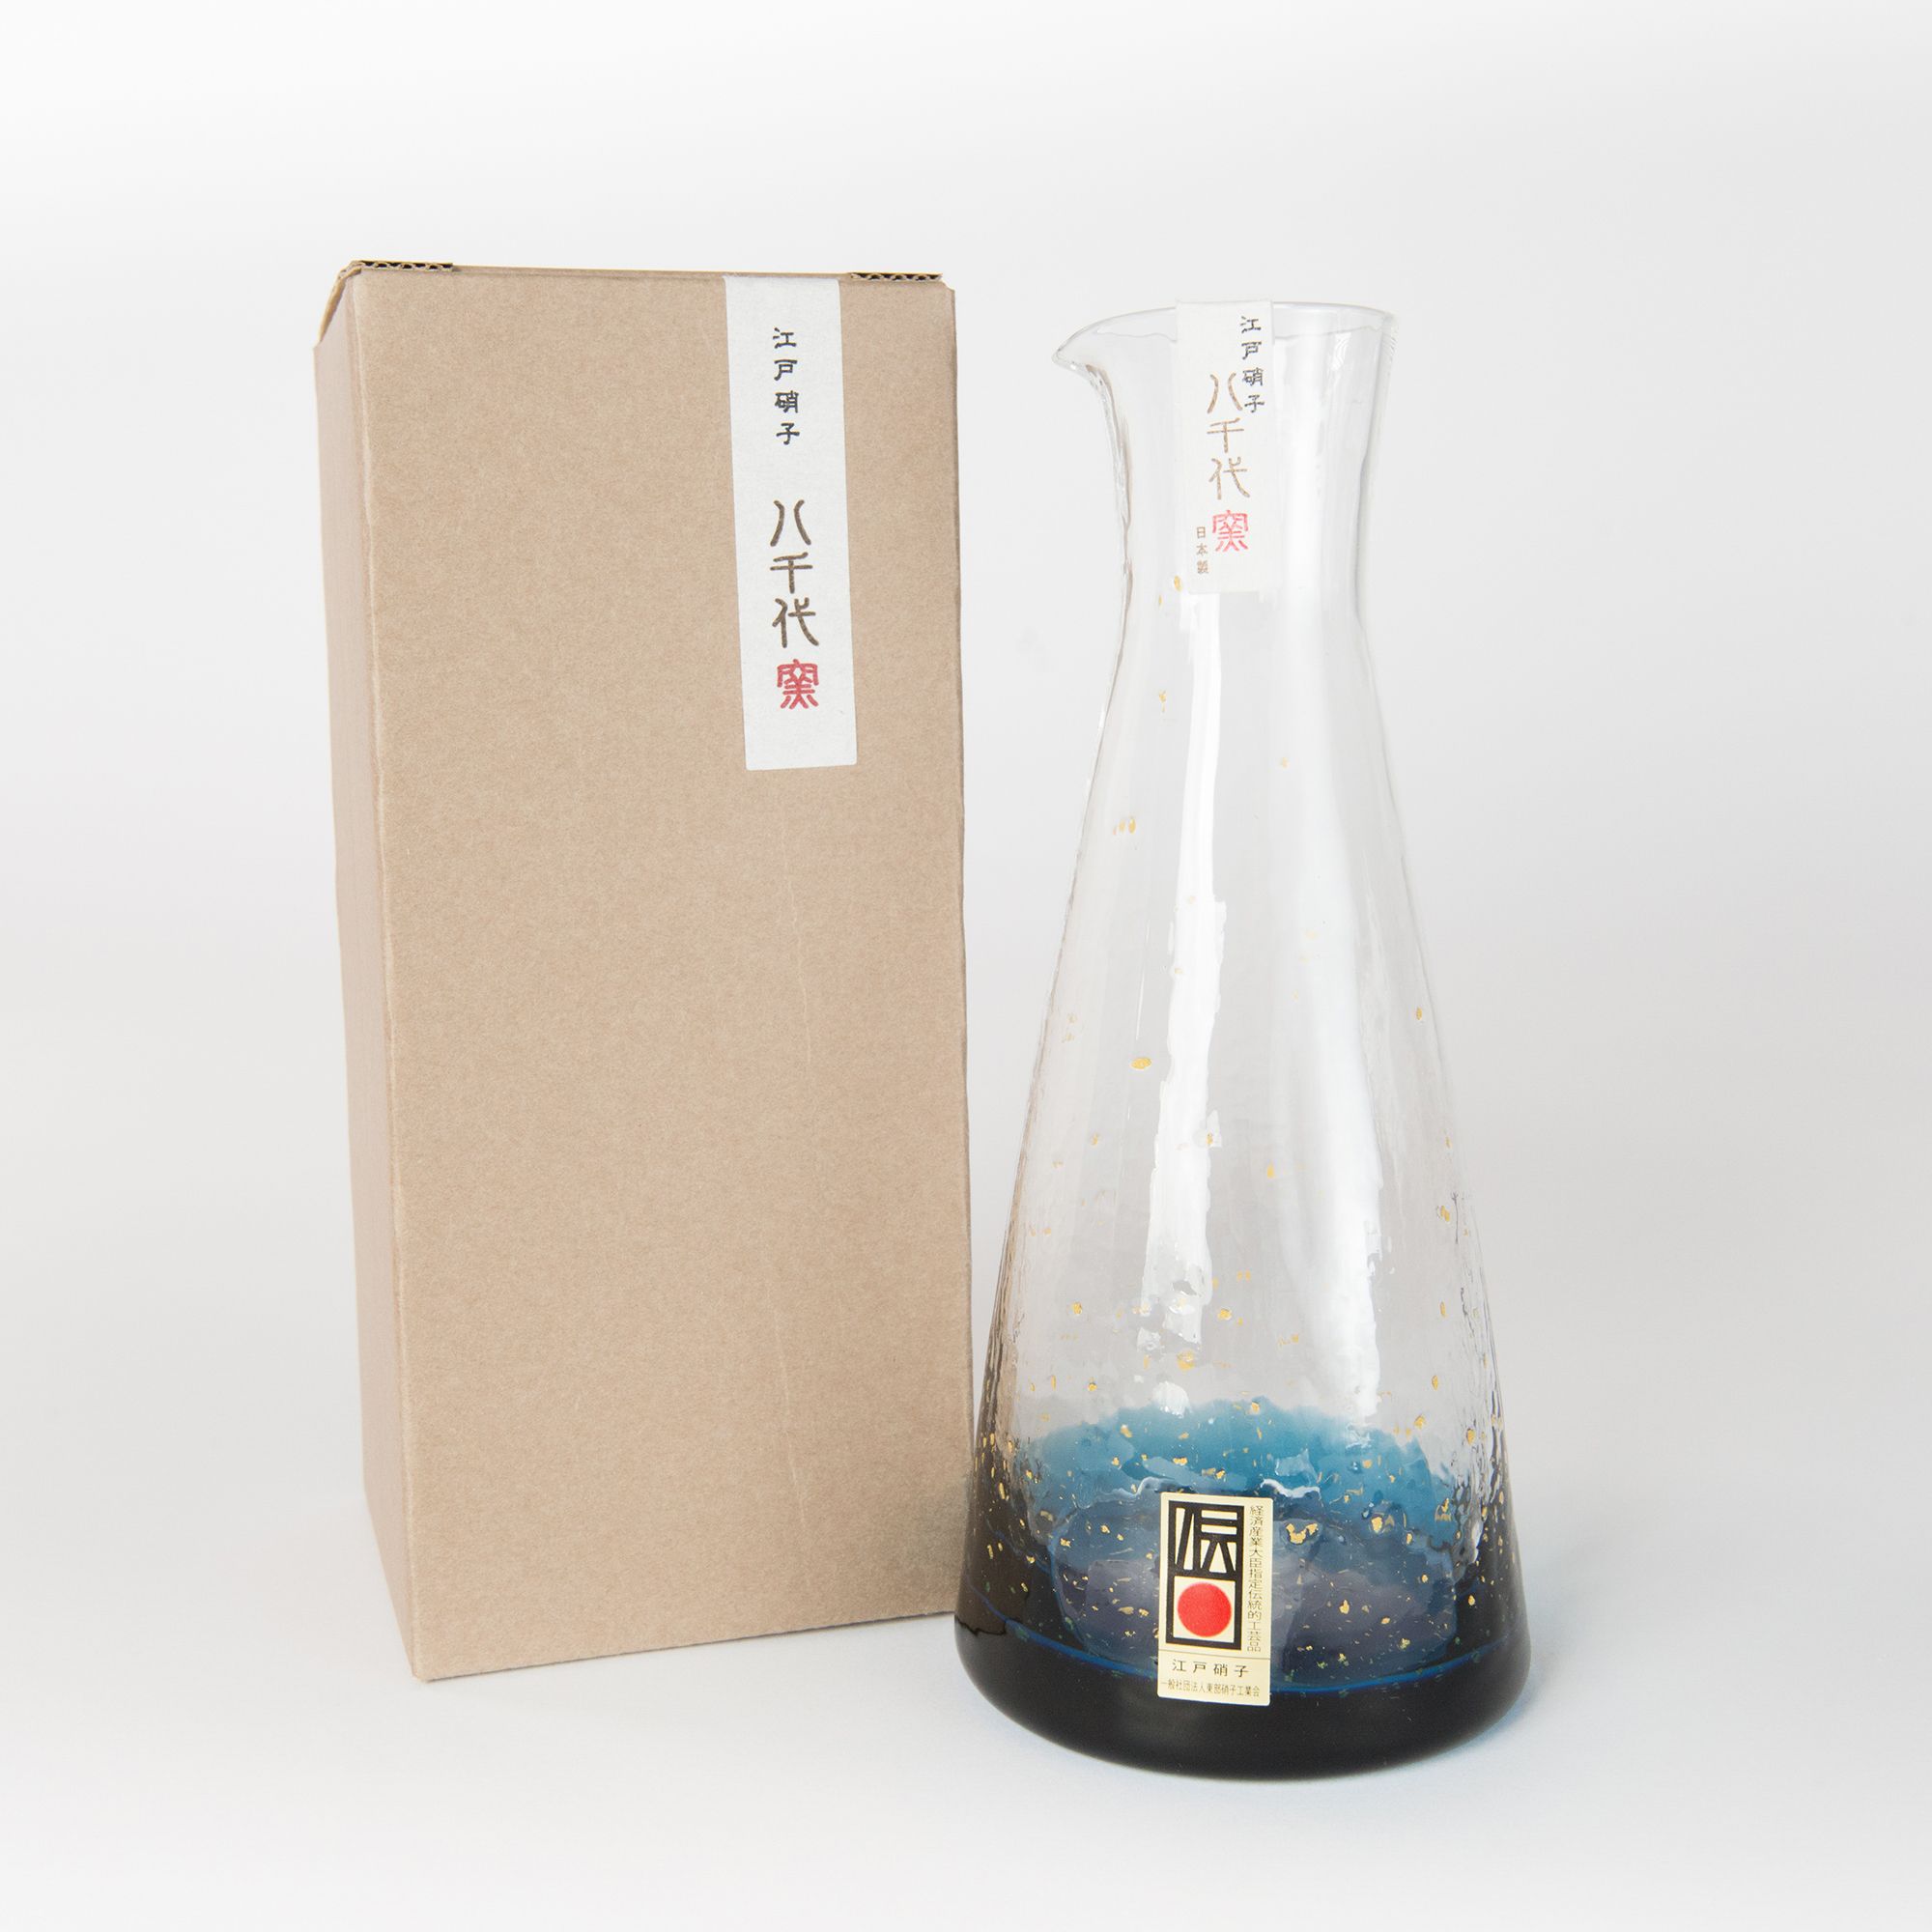 Toyo-Sasaki Glass Yachiyo Sake Bottle